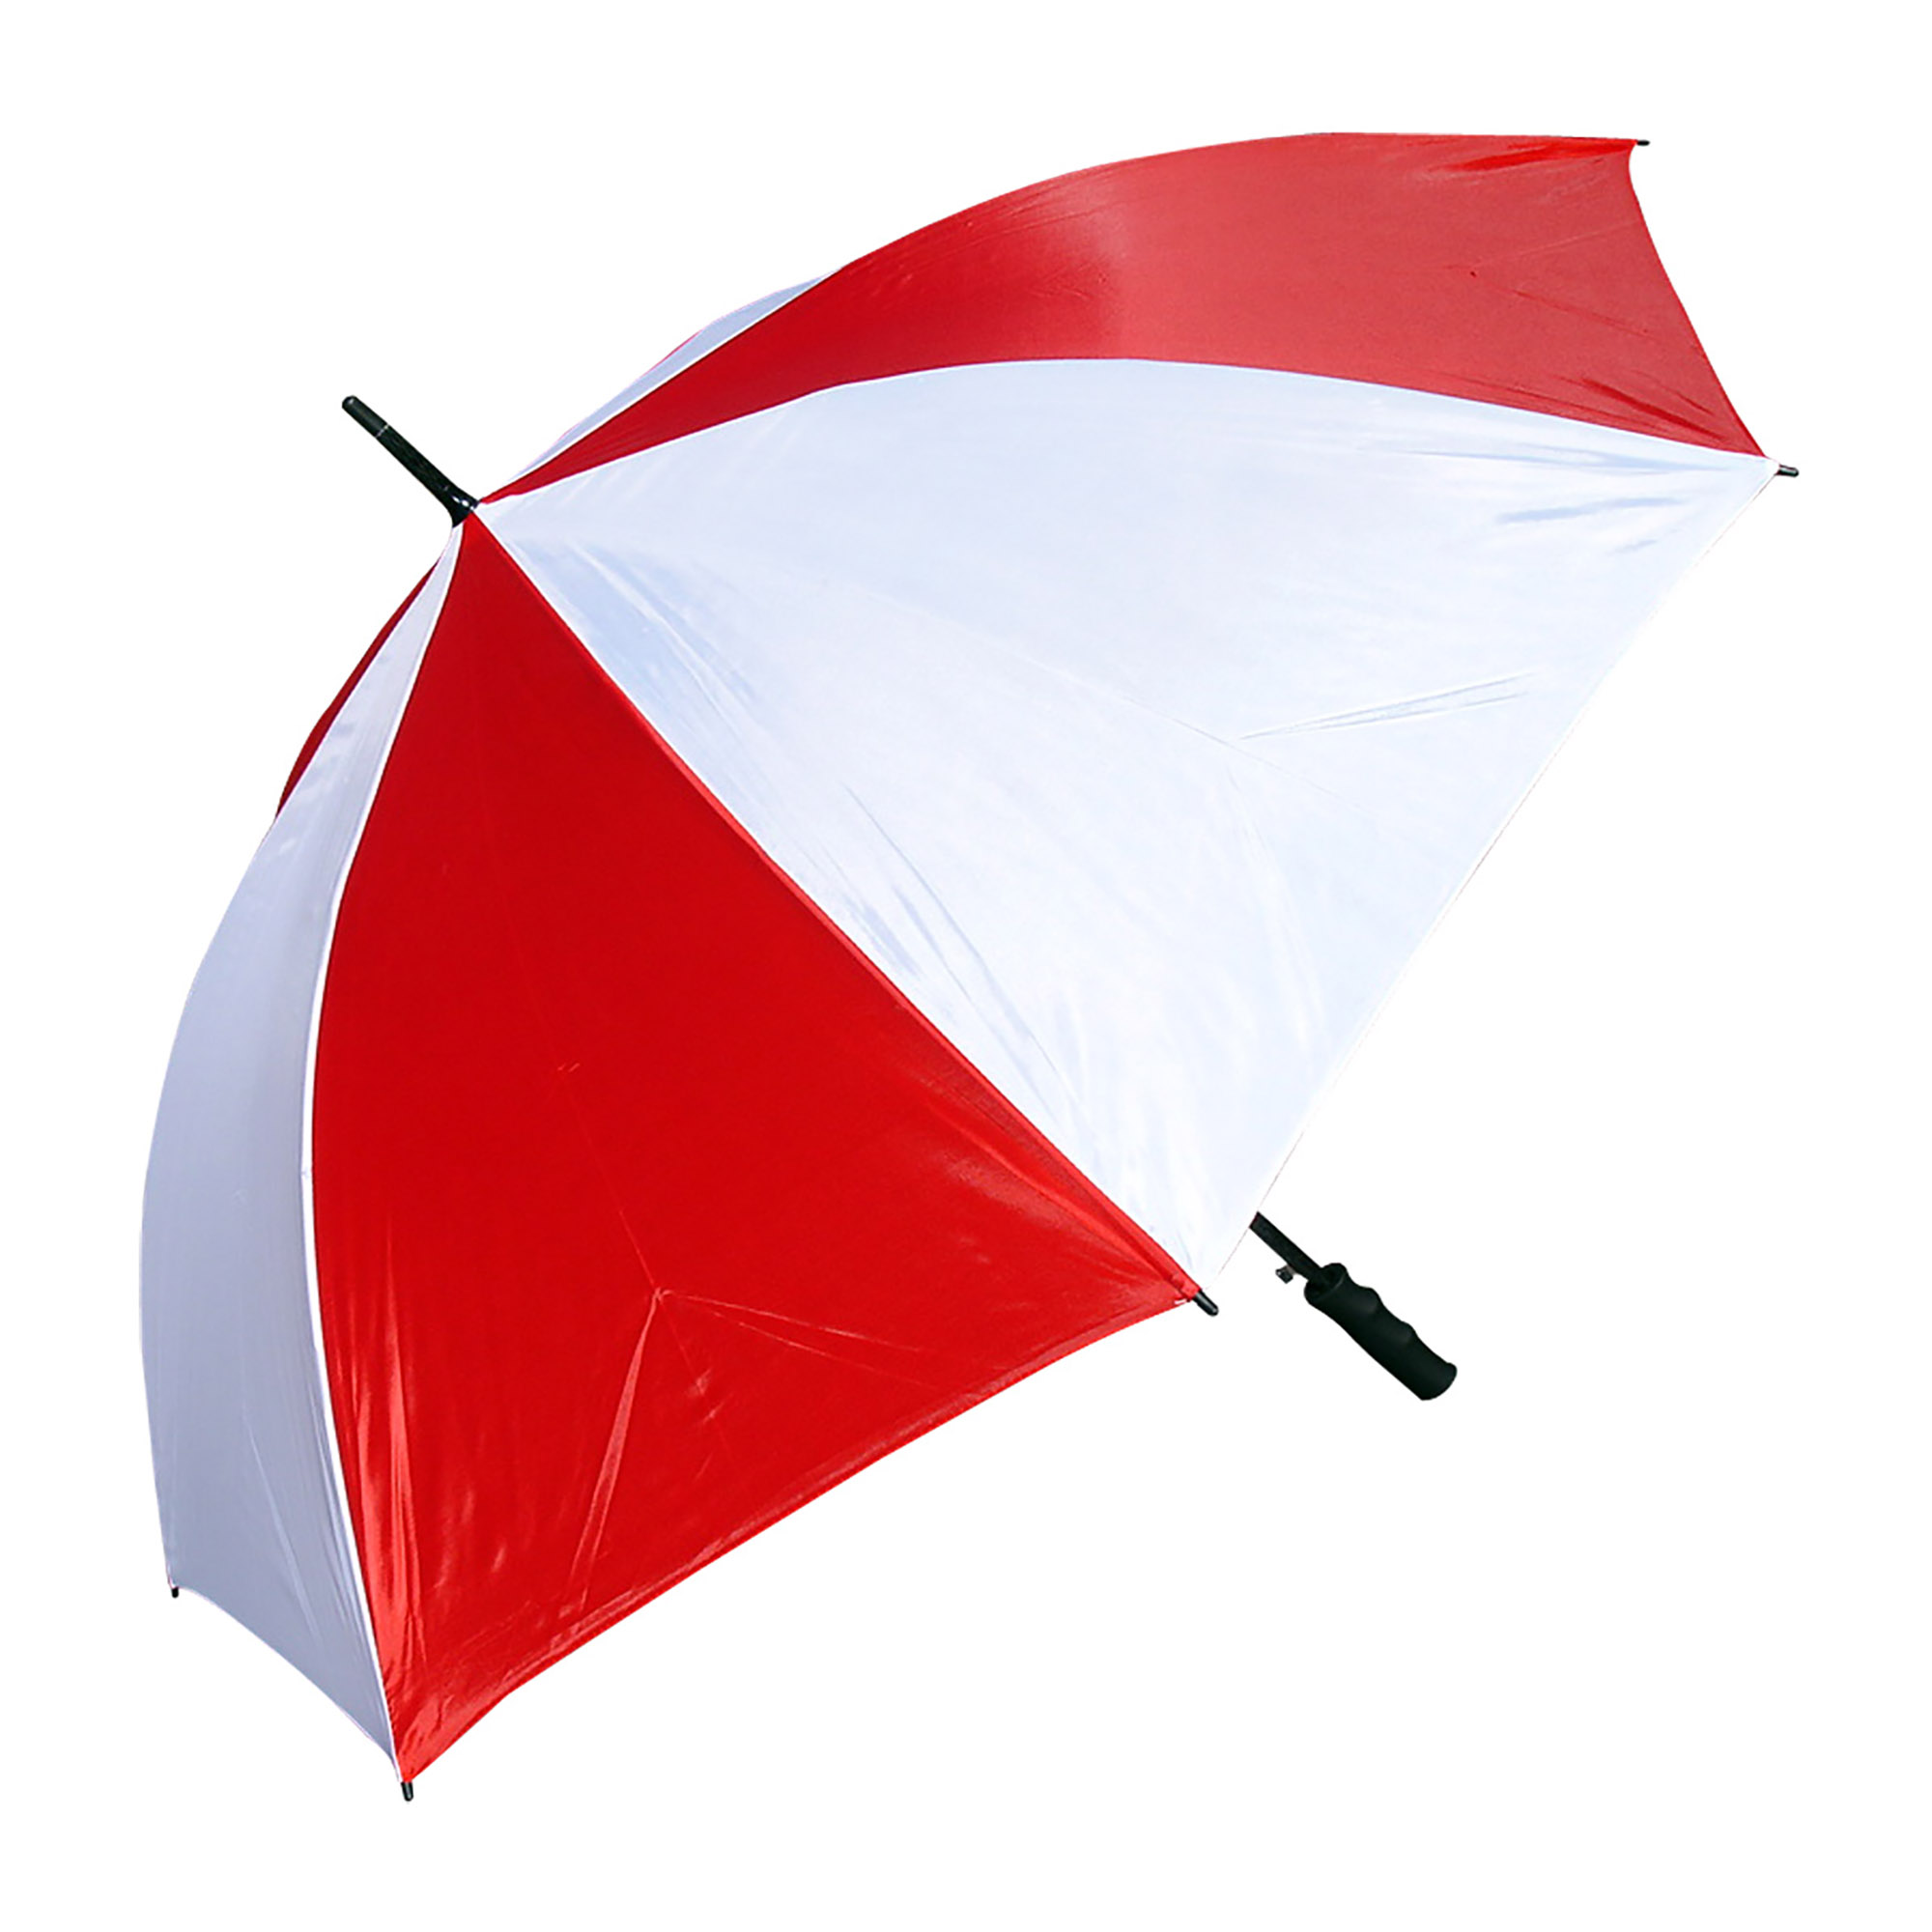 Bulk Promotional White Red Sands Umbrella Online In Perth Australia